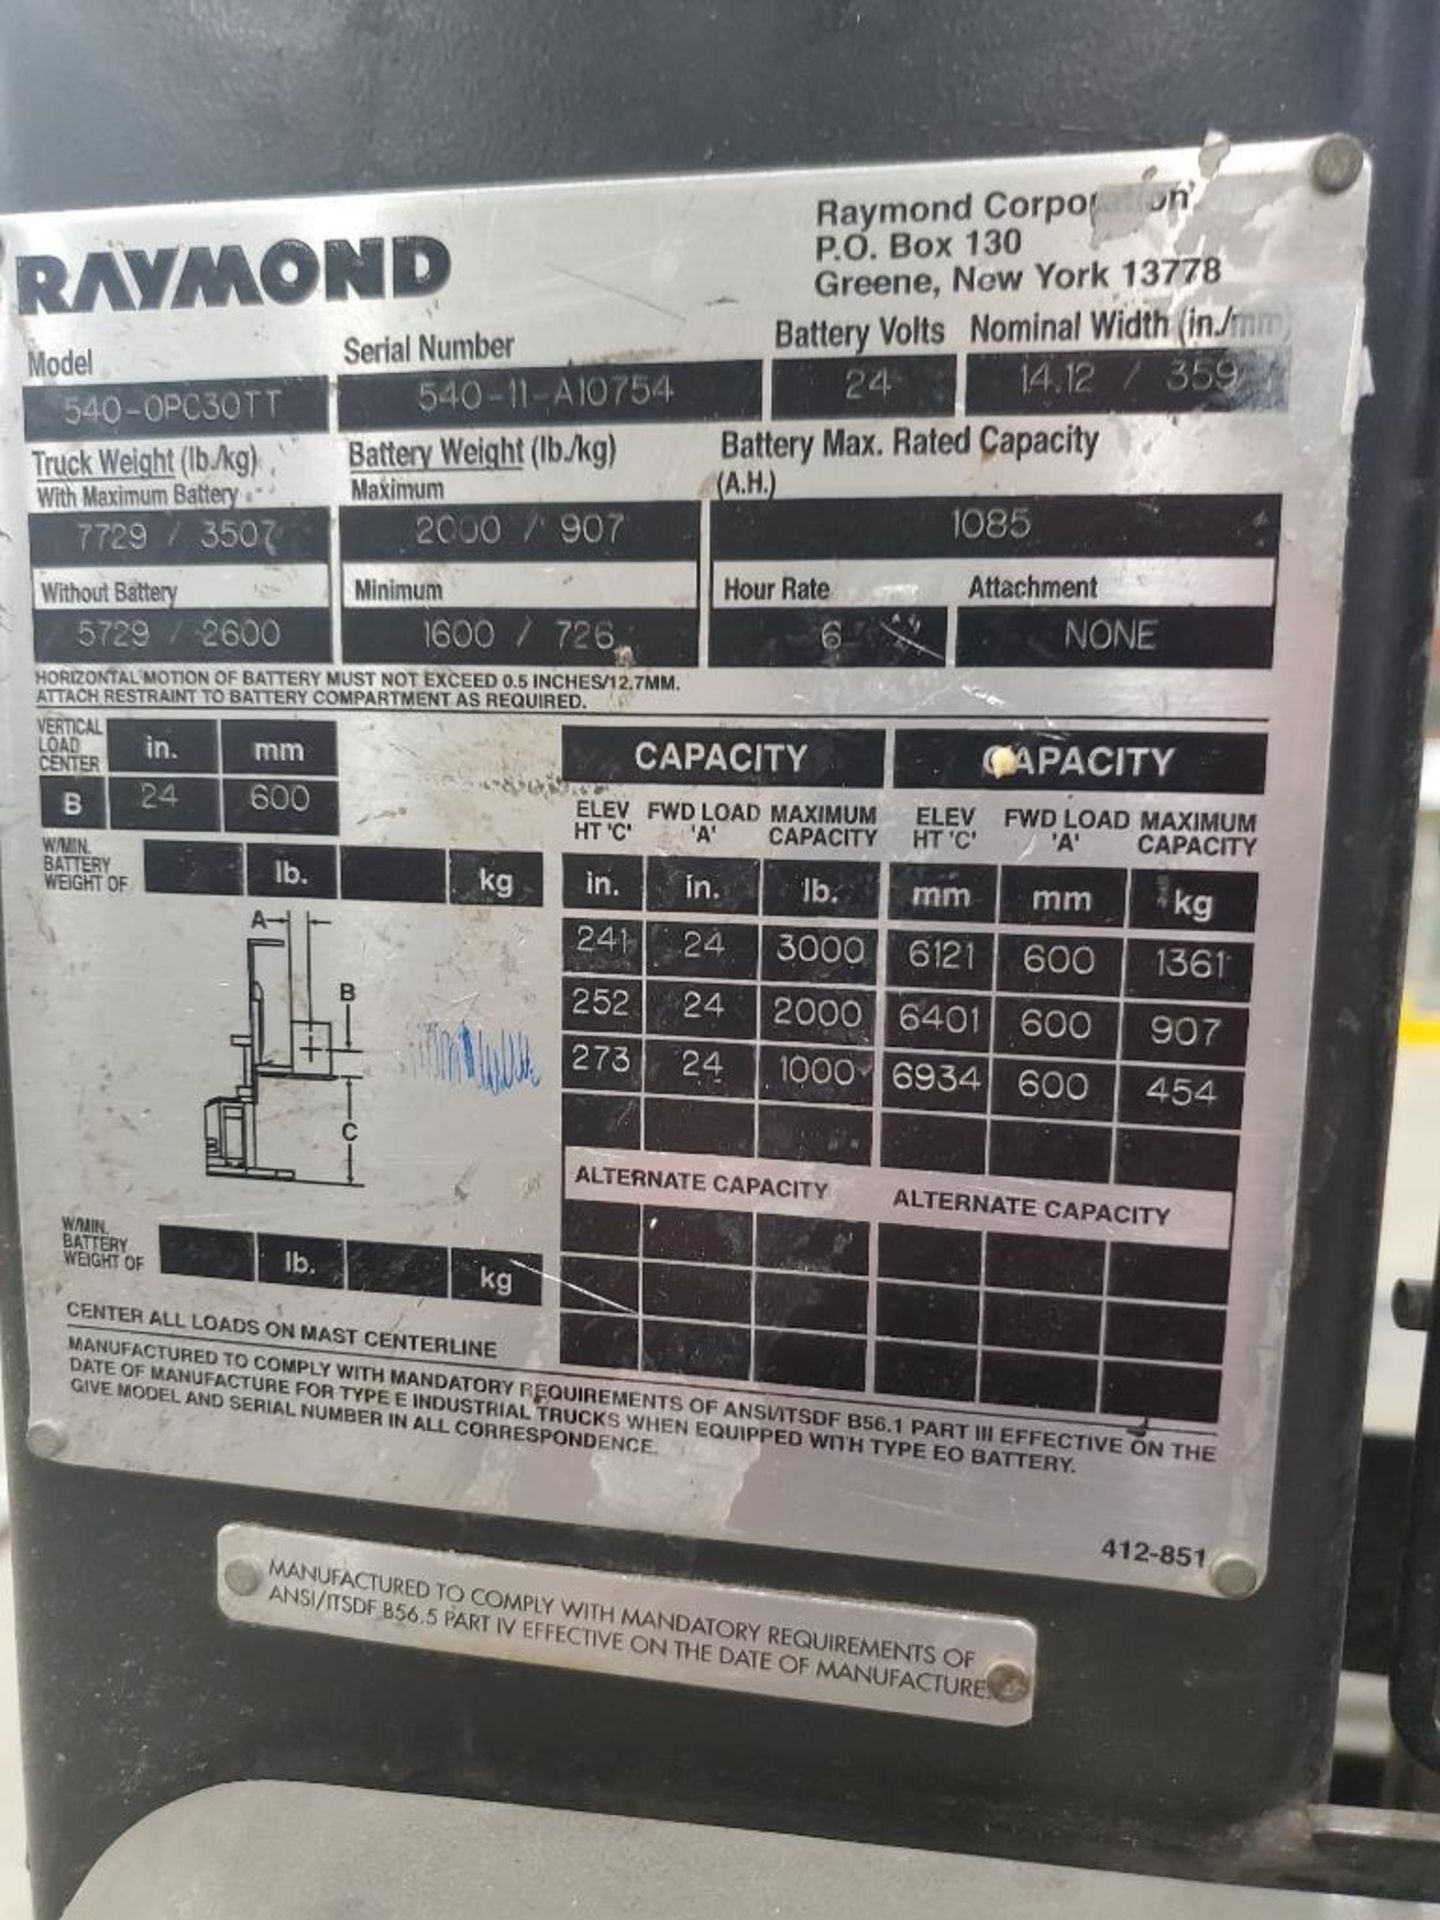 2011 RAYMOND 3,000 LB. CAPACITY ORDER PICKER; MODEL 540-OPC30TT, S/N 540-11-A10754, ELECTRIC, 12,205 - Image 6 of 7